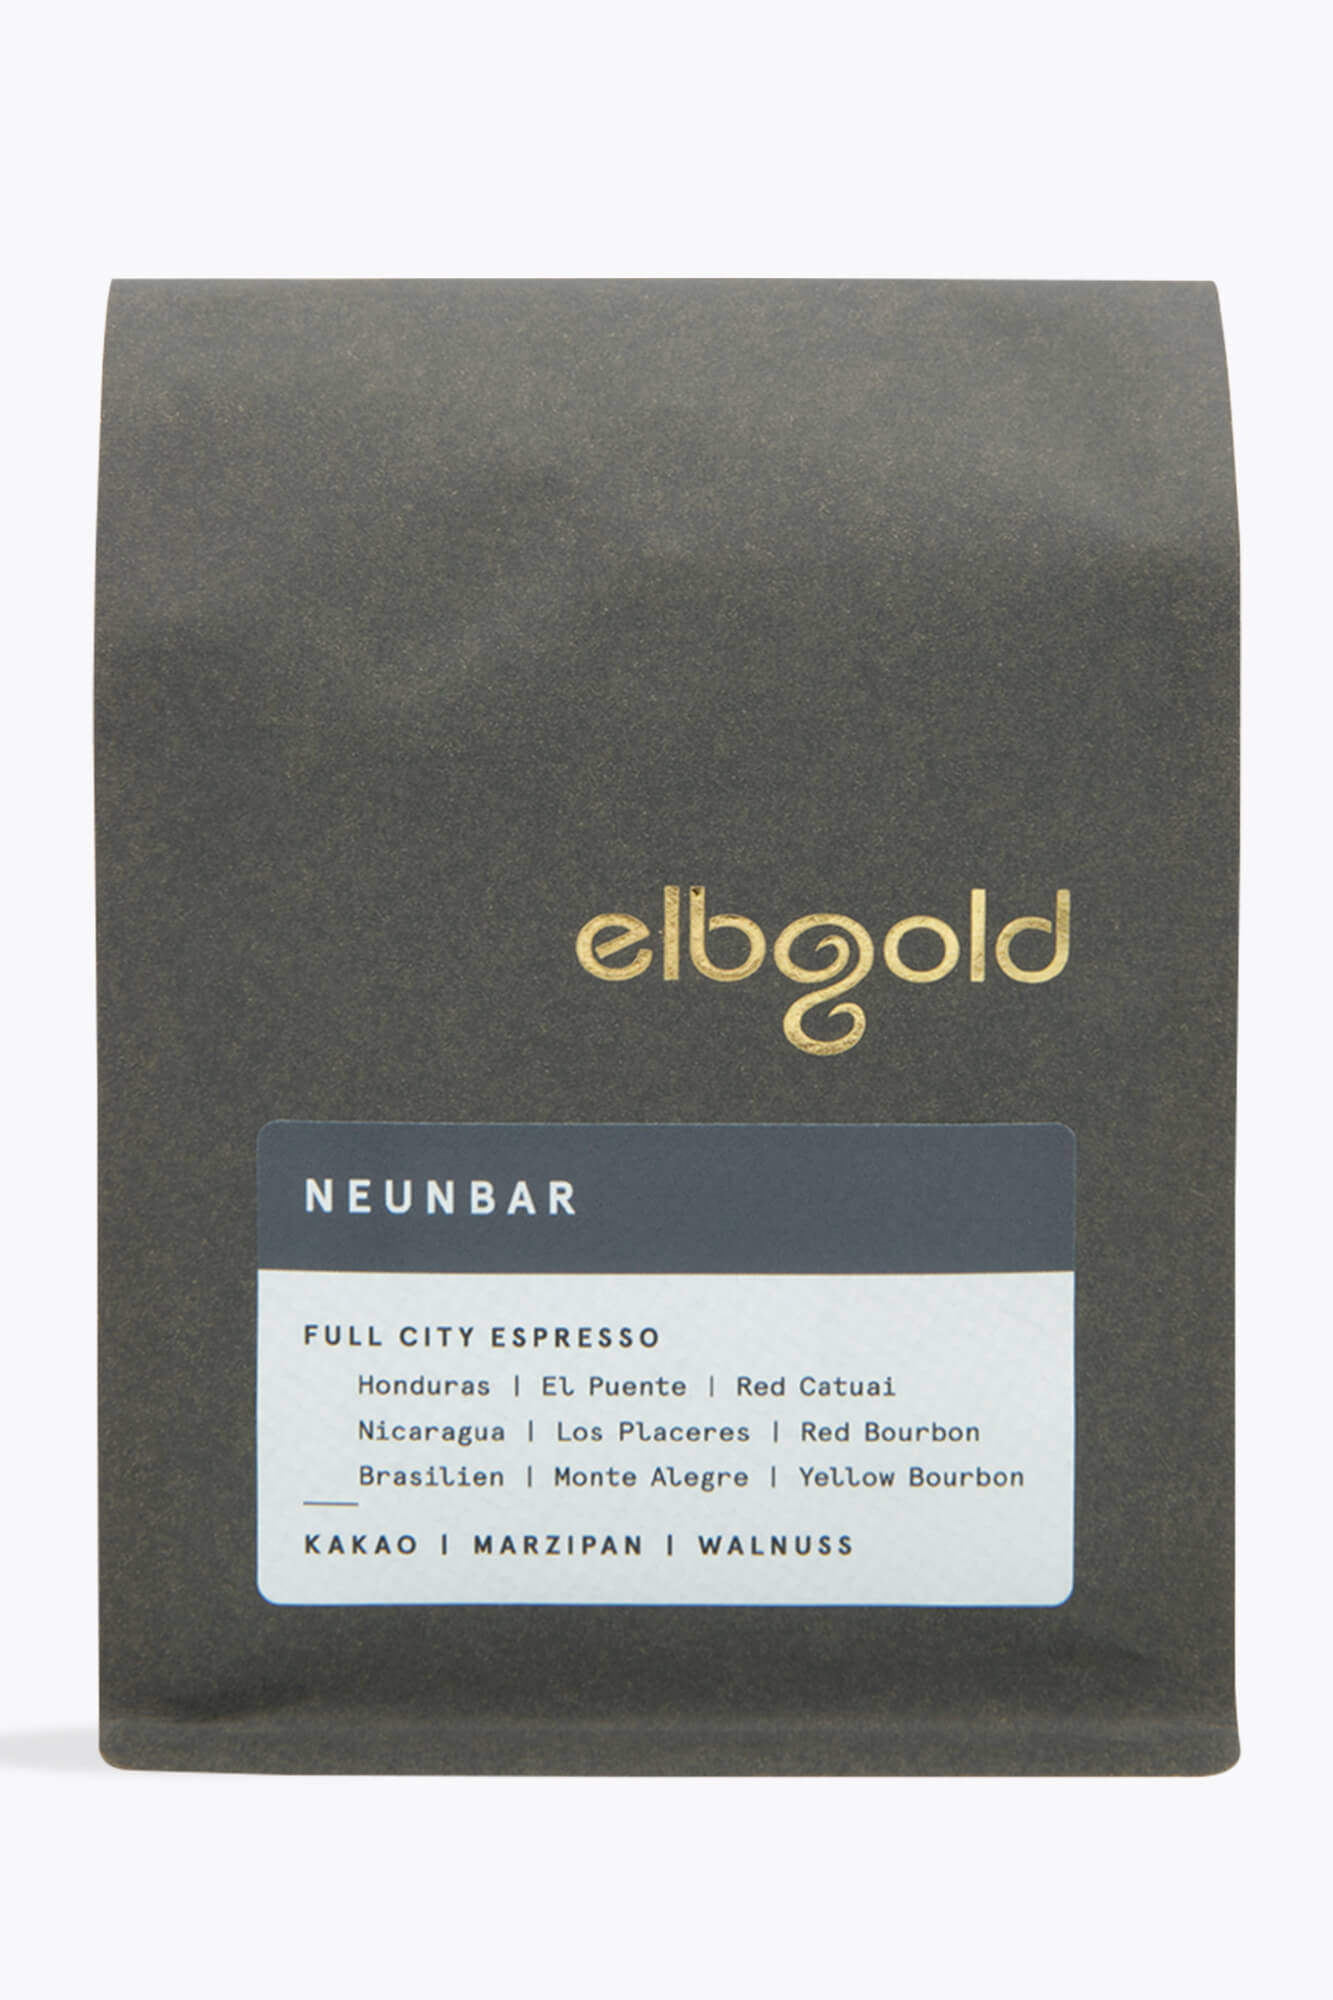 Elbgold Espresso Neunbar